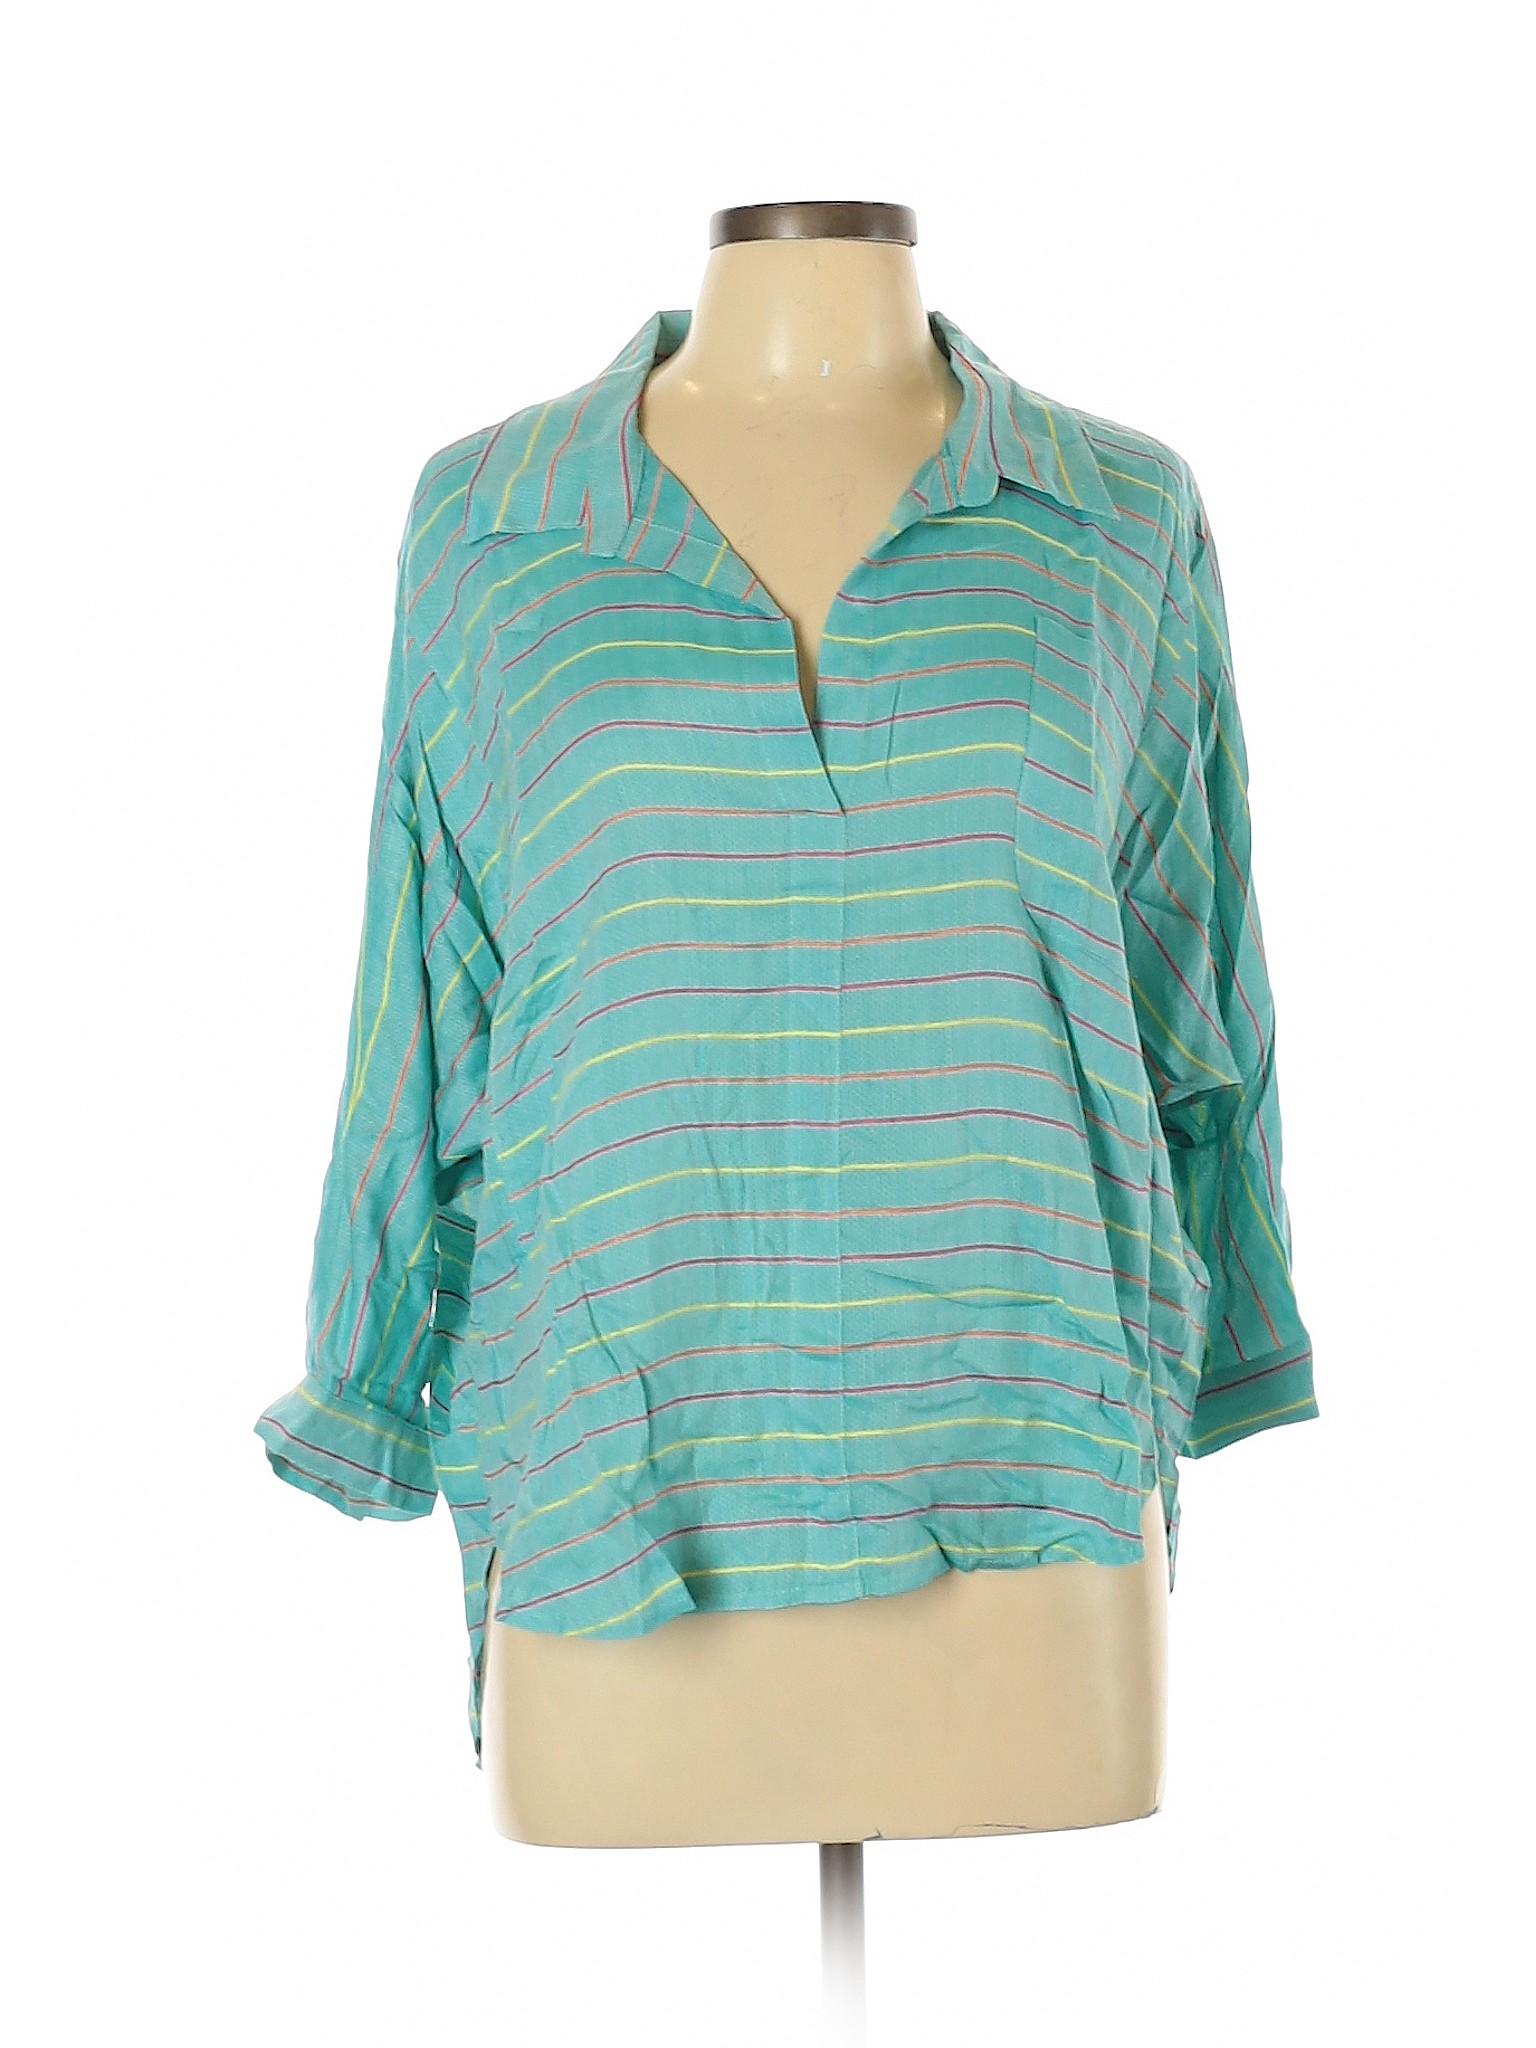 DRA Women Green Short Sleeve Blouse L | eBay